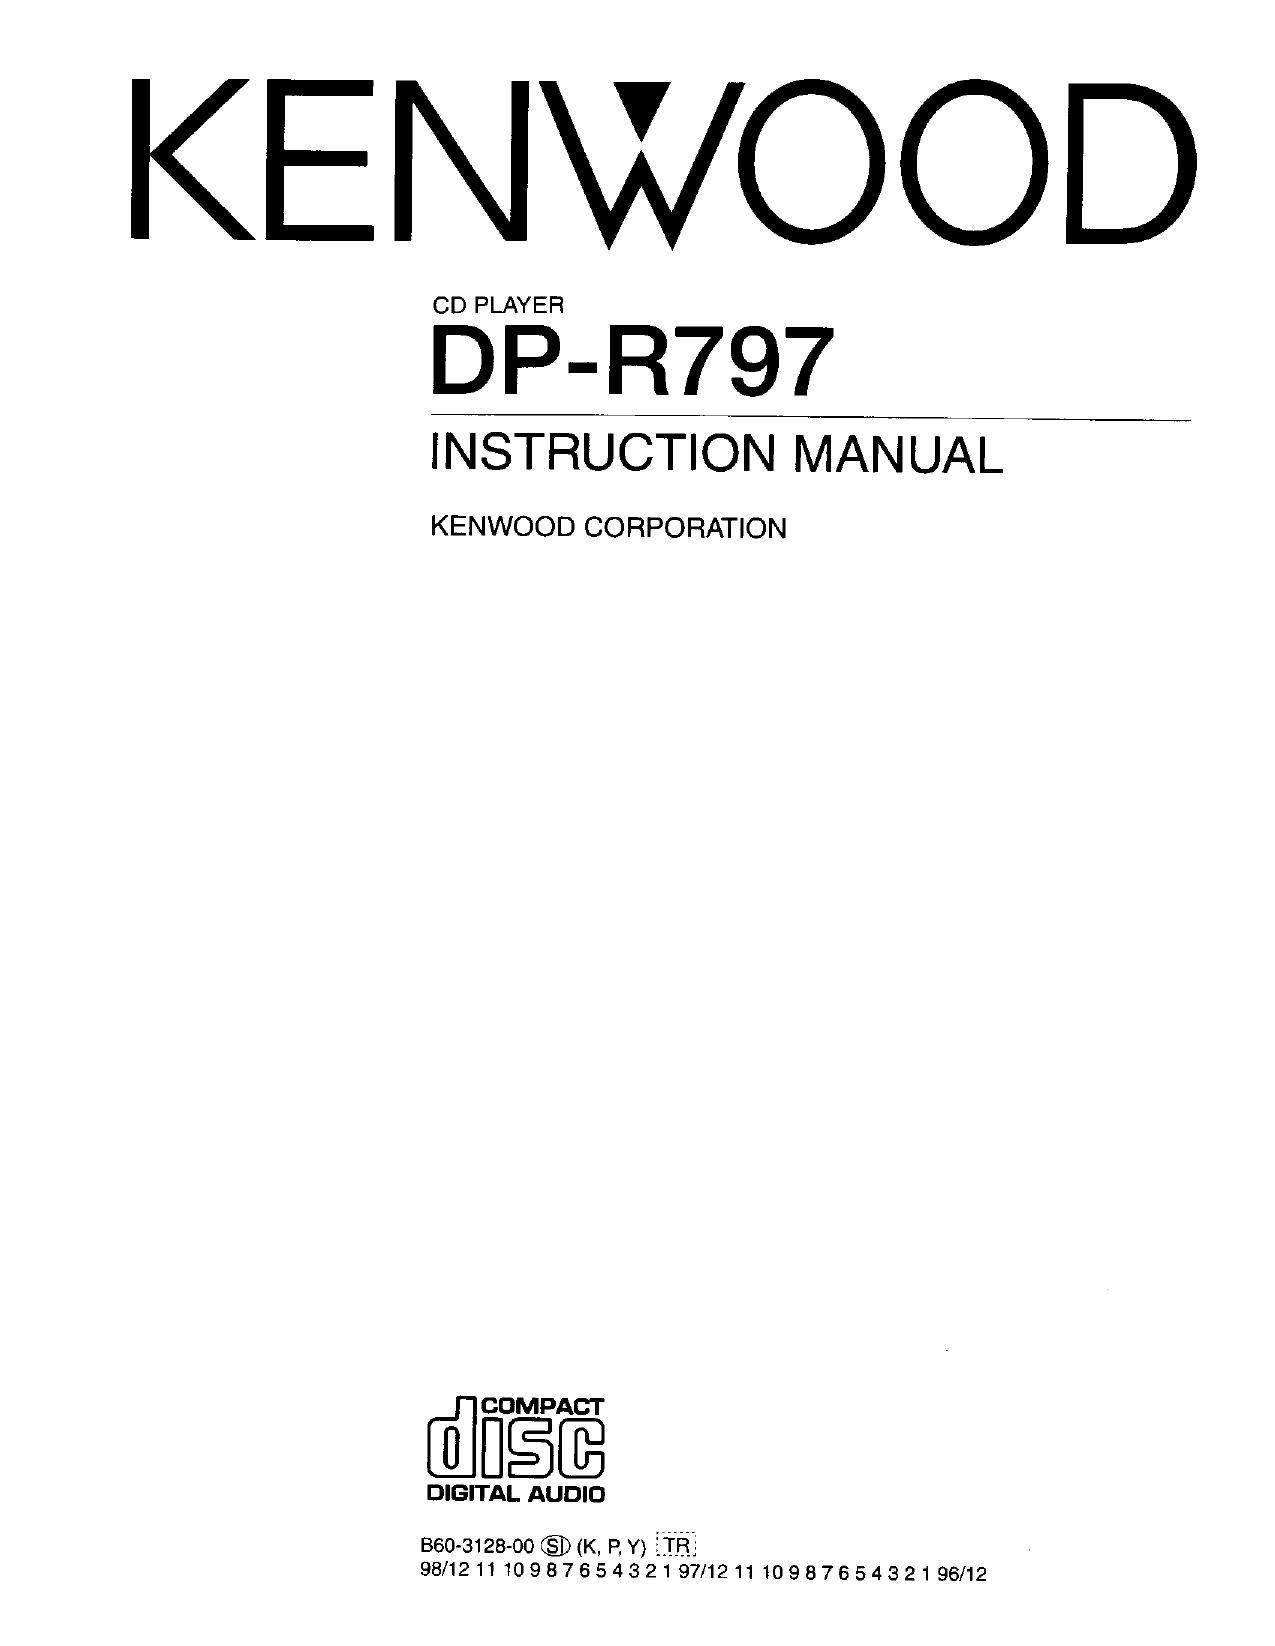 Kenwood DPR 797 Owners Manual